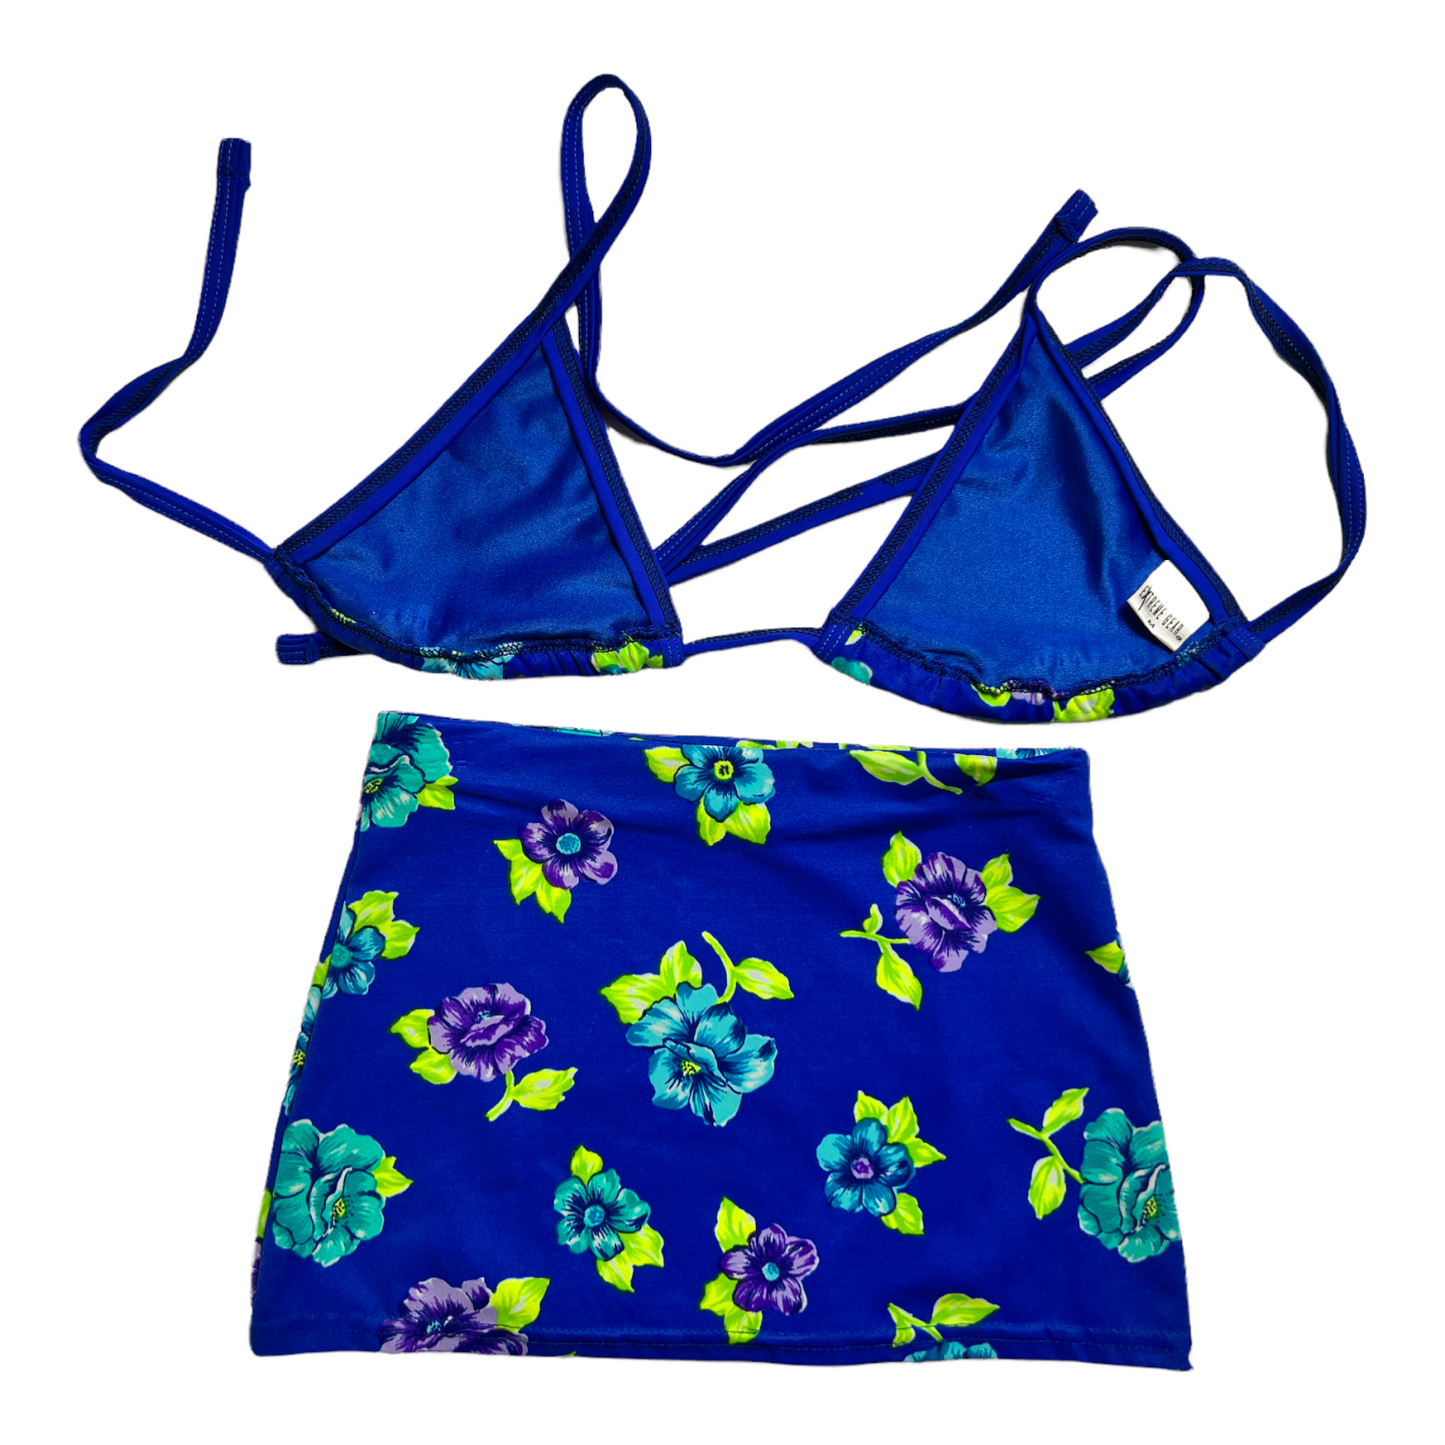 New Blue/Multicolor Flower String Bikini Top & Skirt Swimsuit size XS (SwimWear)